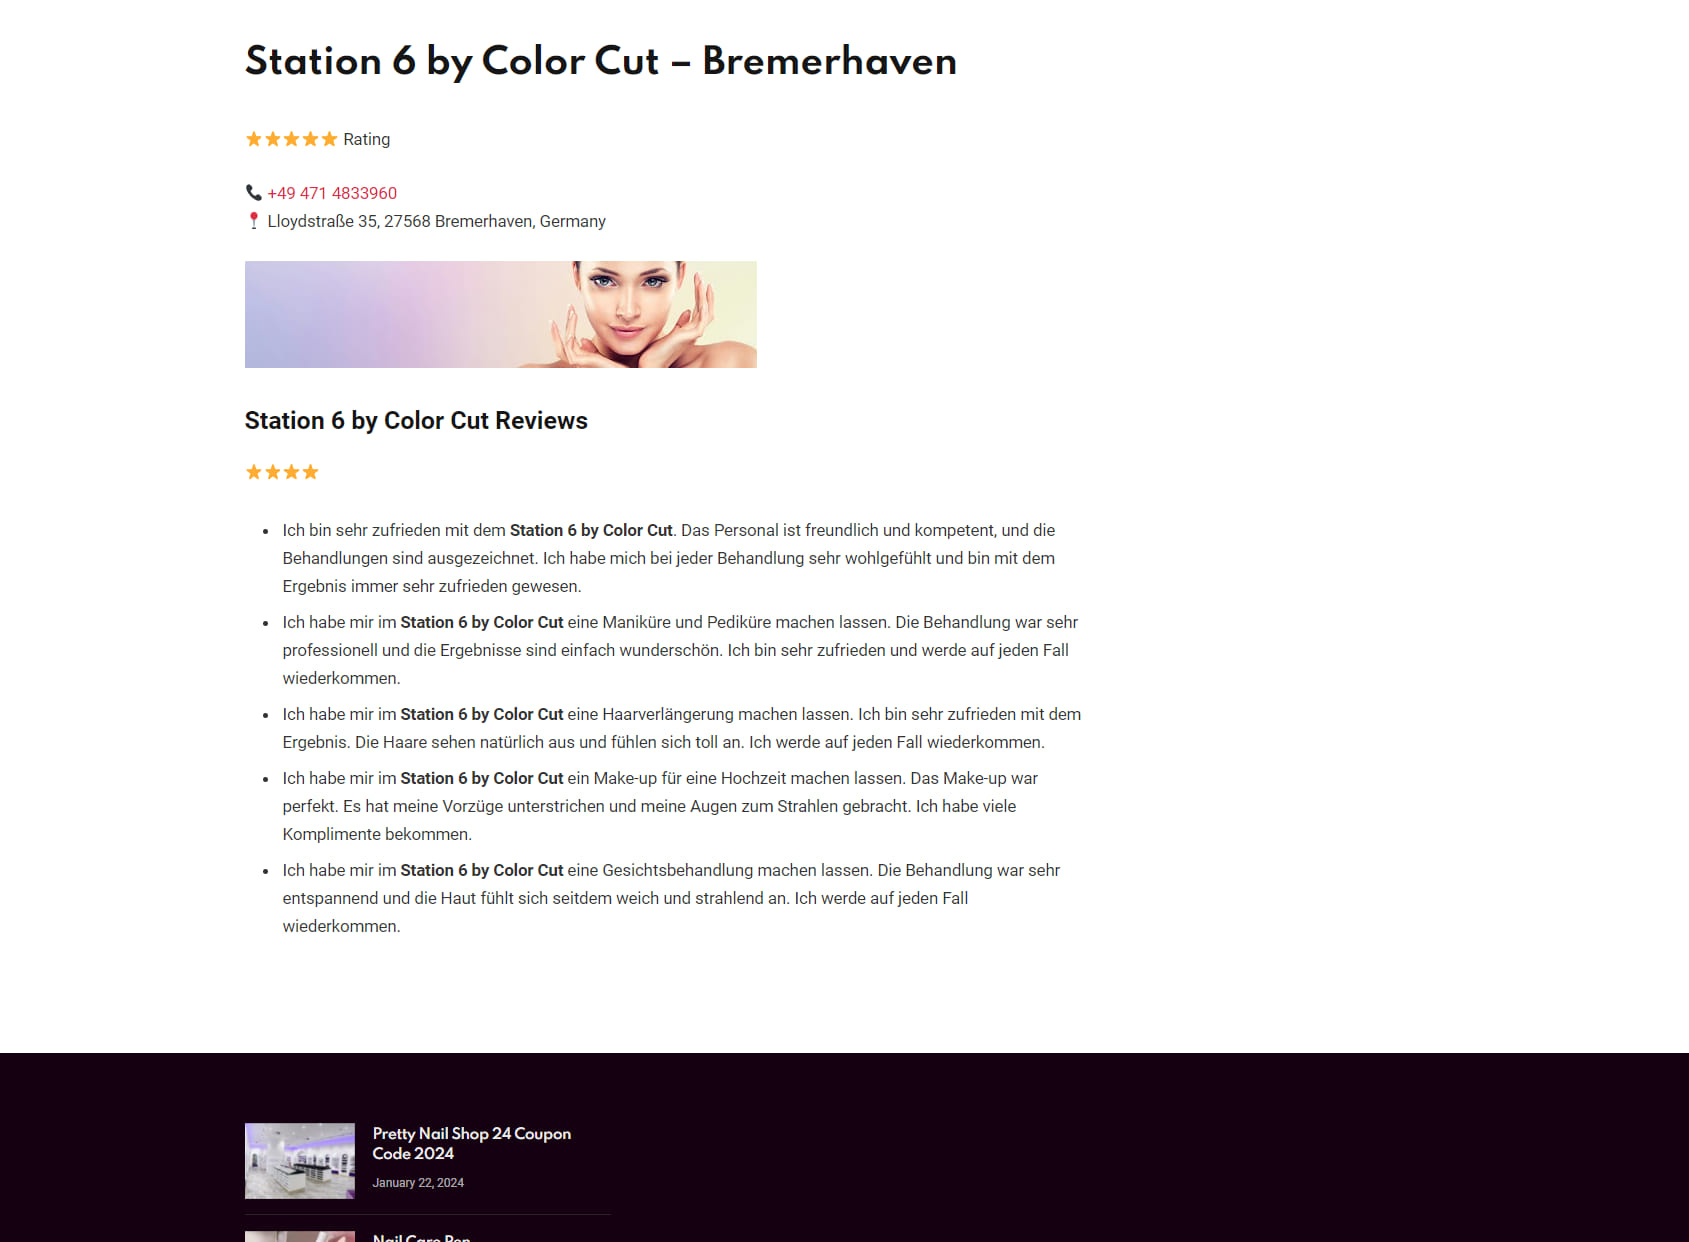 Station 6 by Color Cut - Bremerhaven